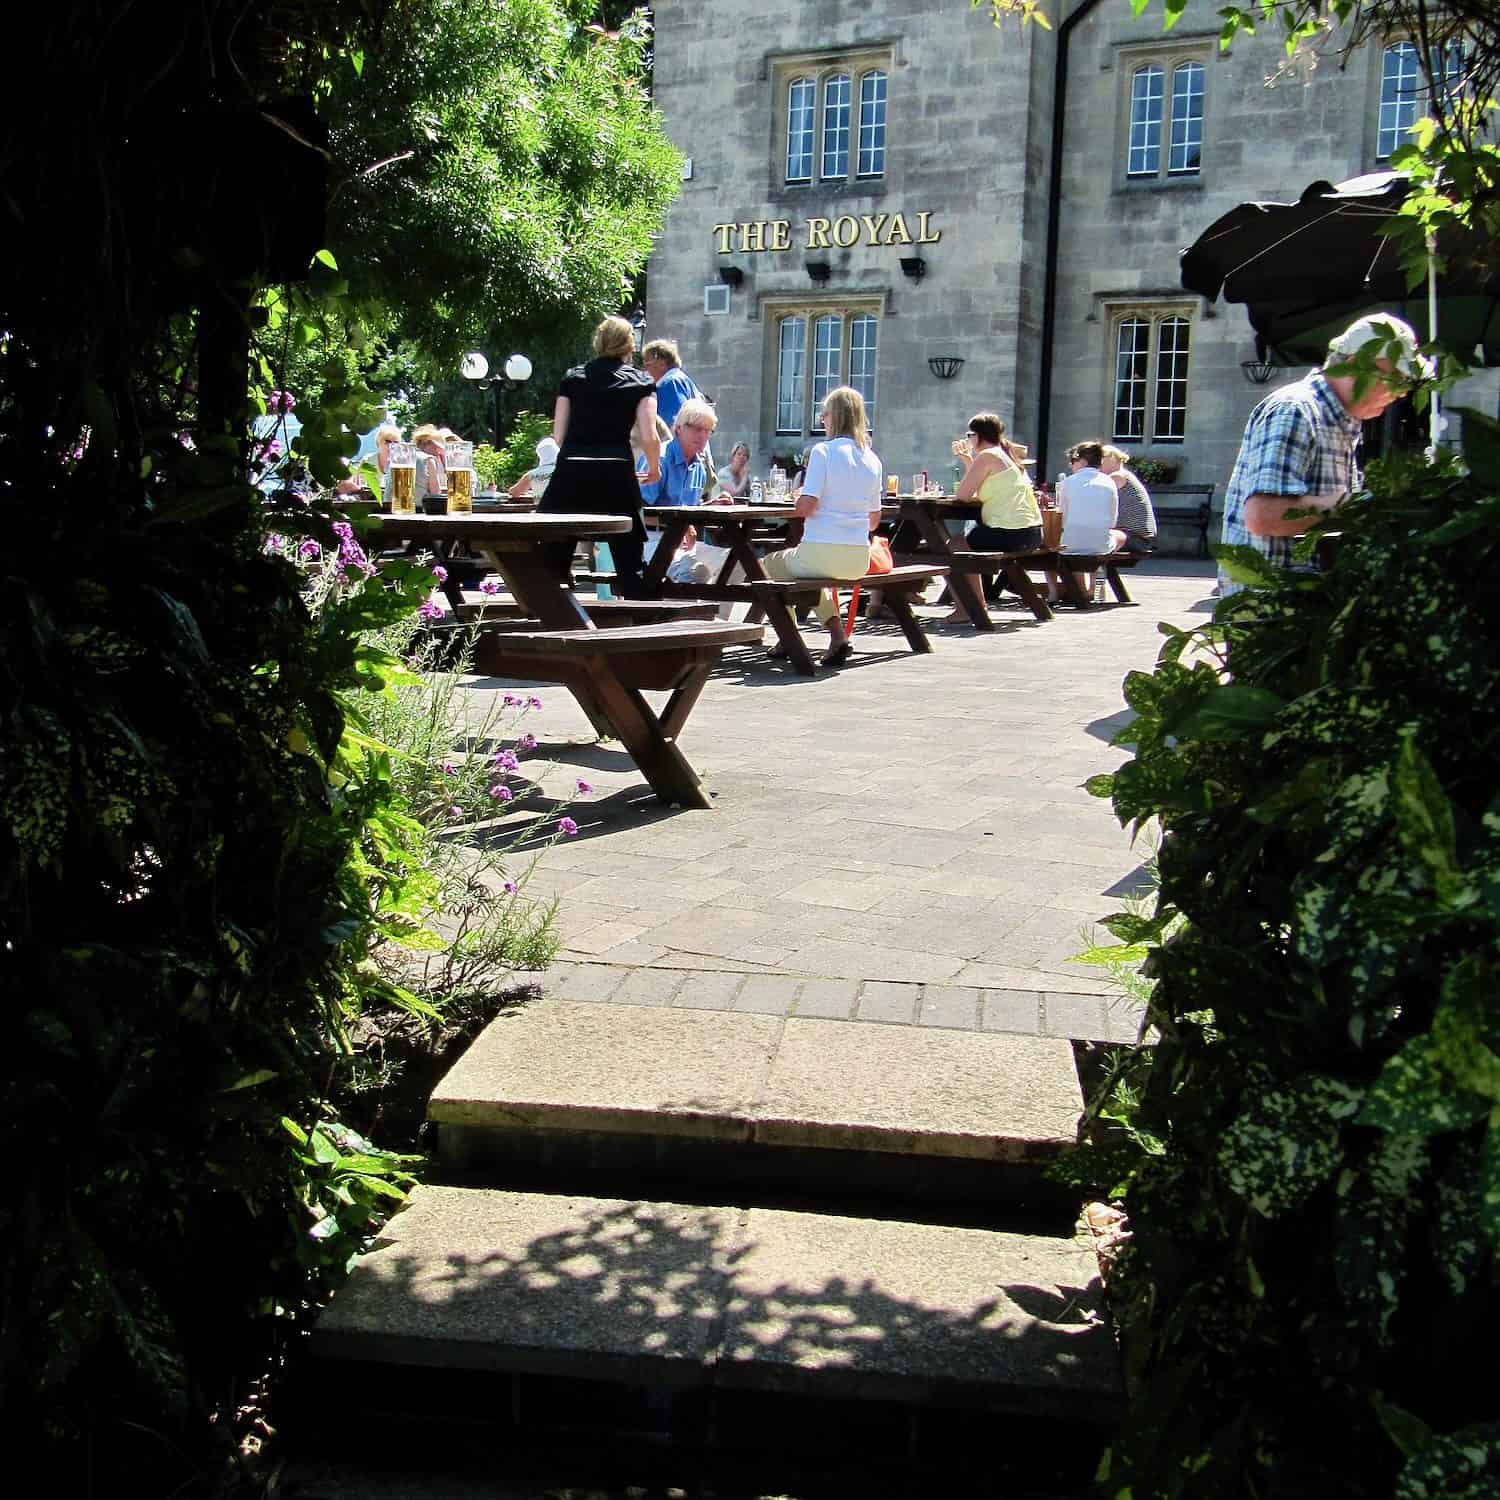 The Royal Inn Portishead beer garden on a sunny day